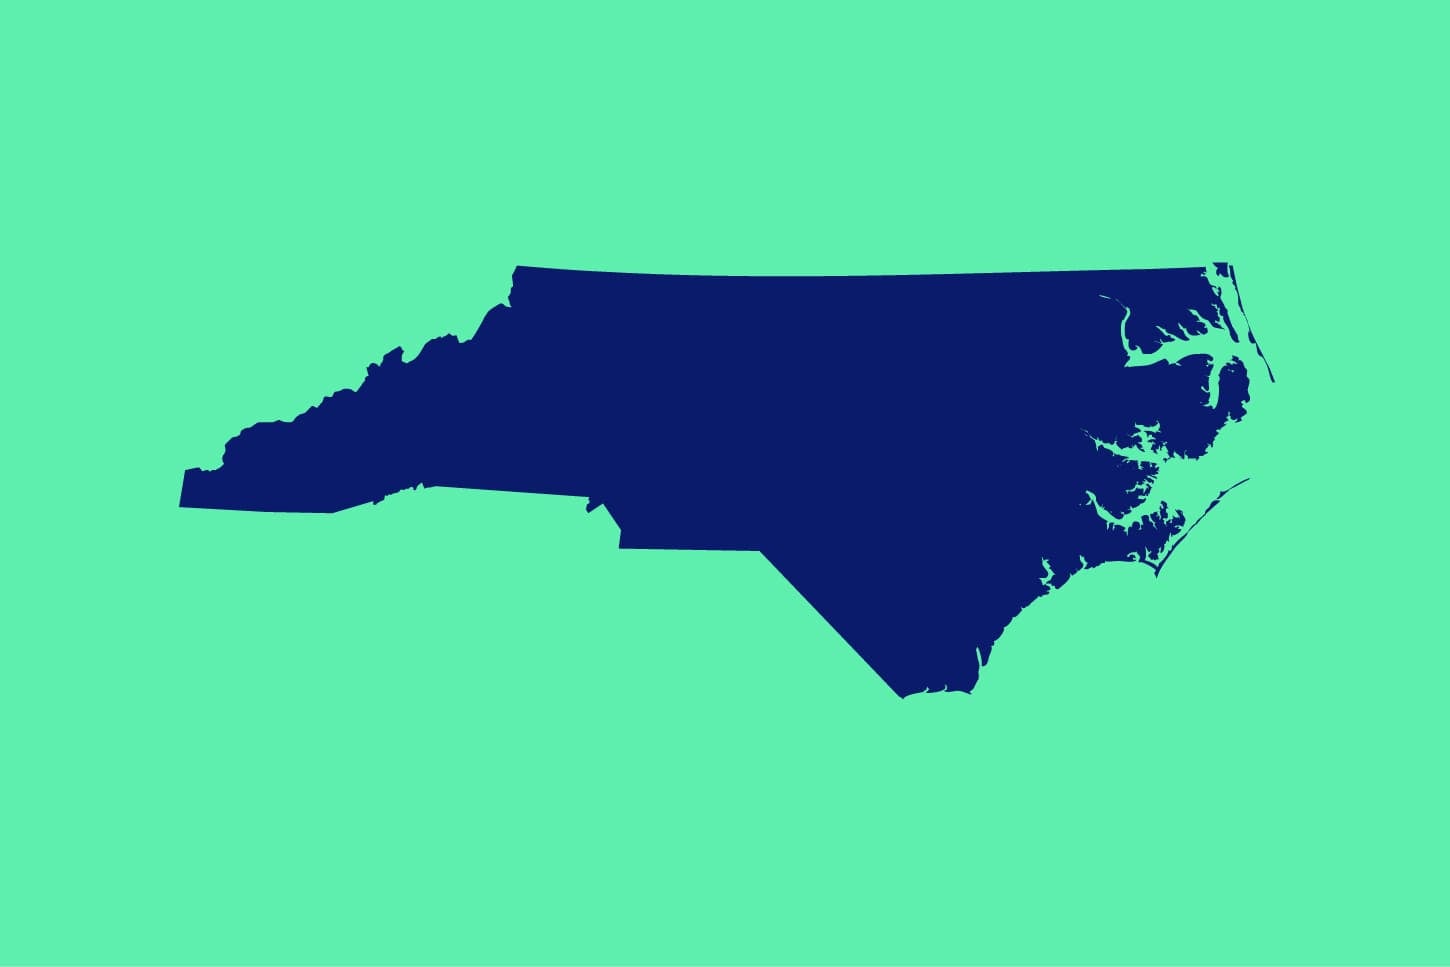 North Carolina map